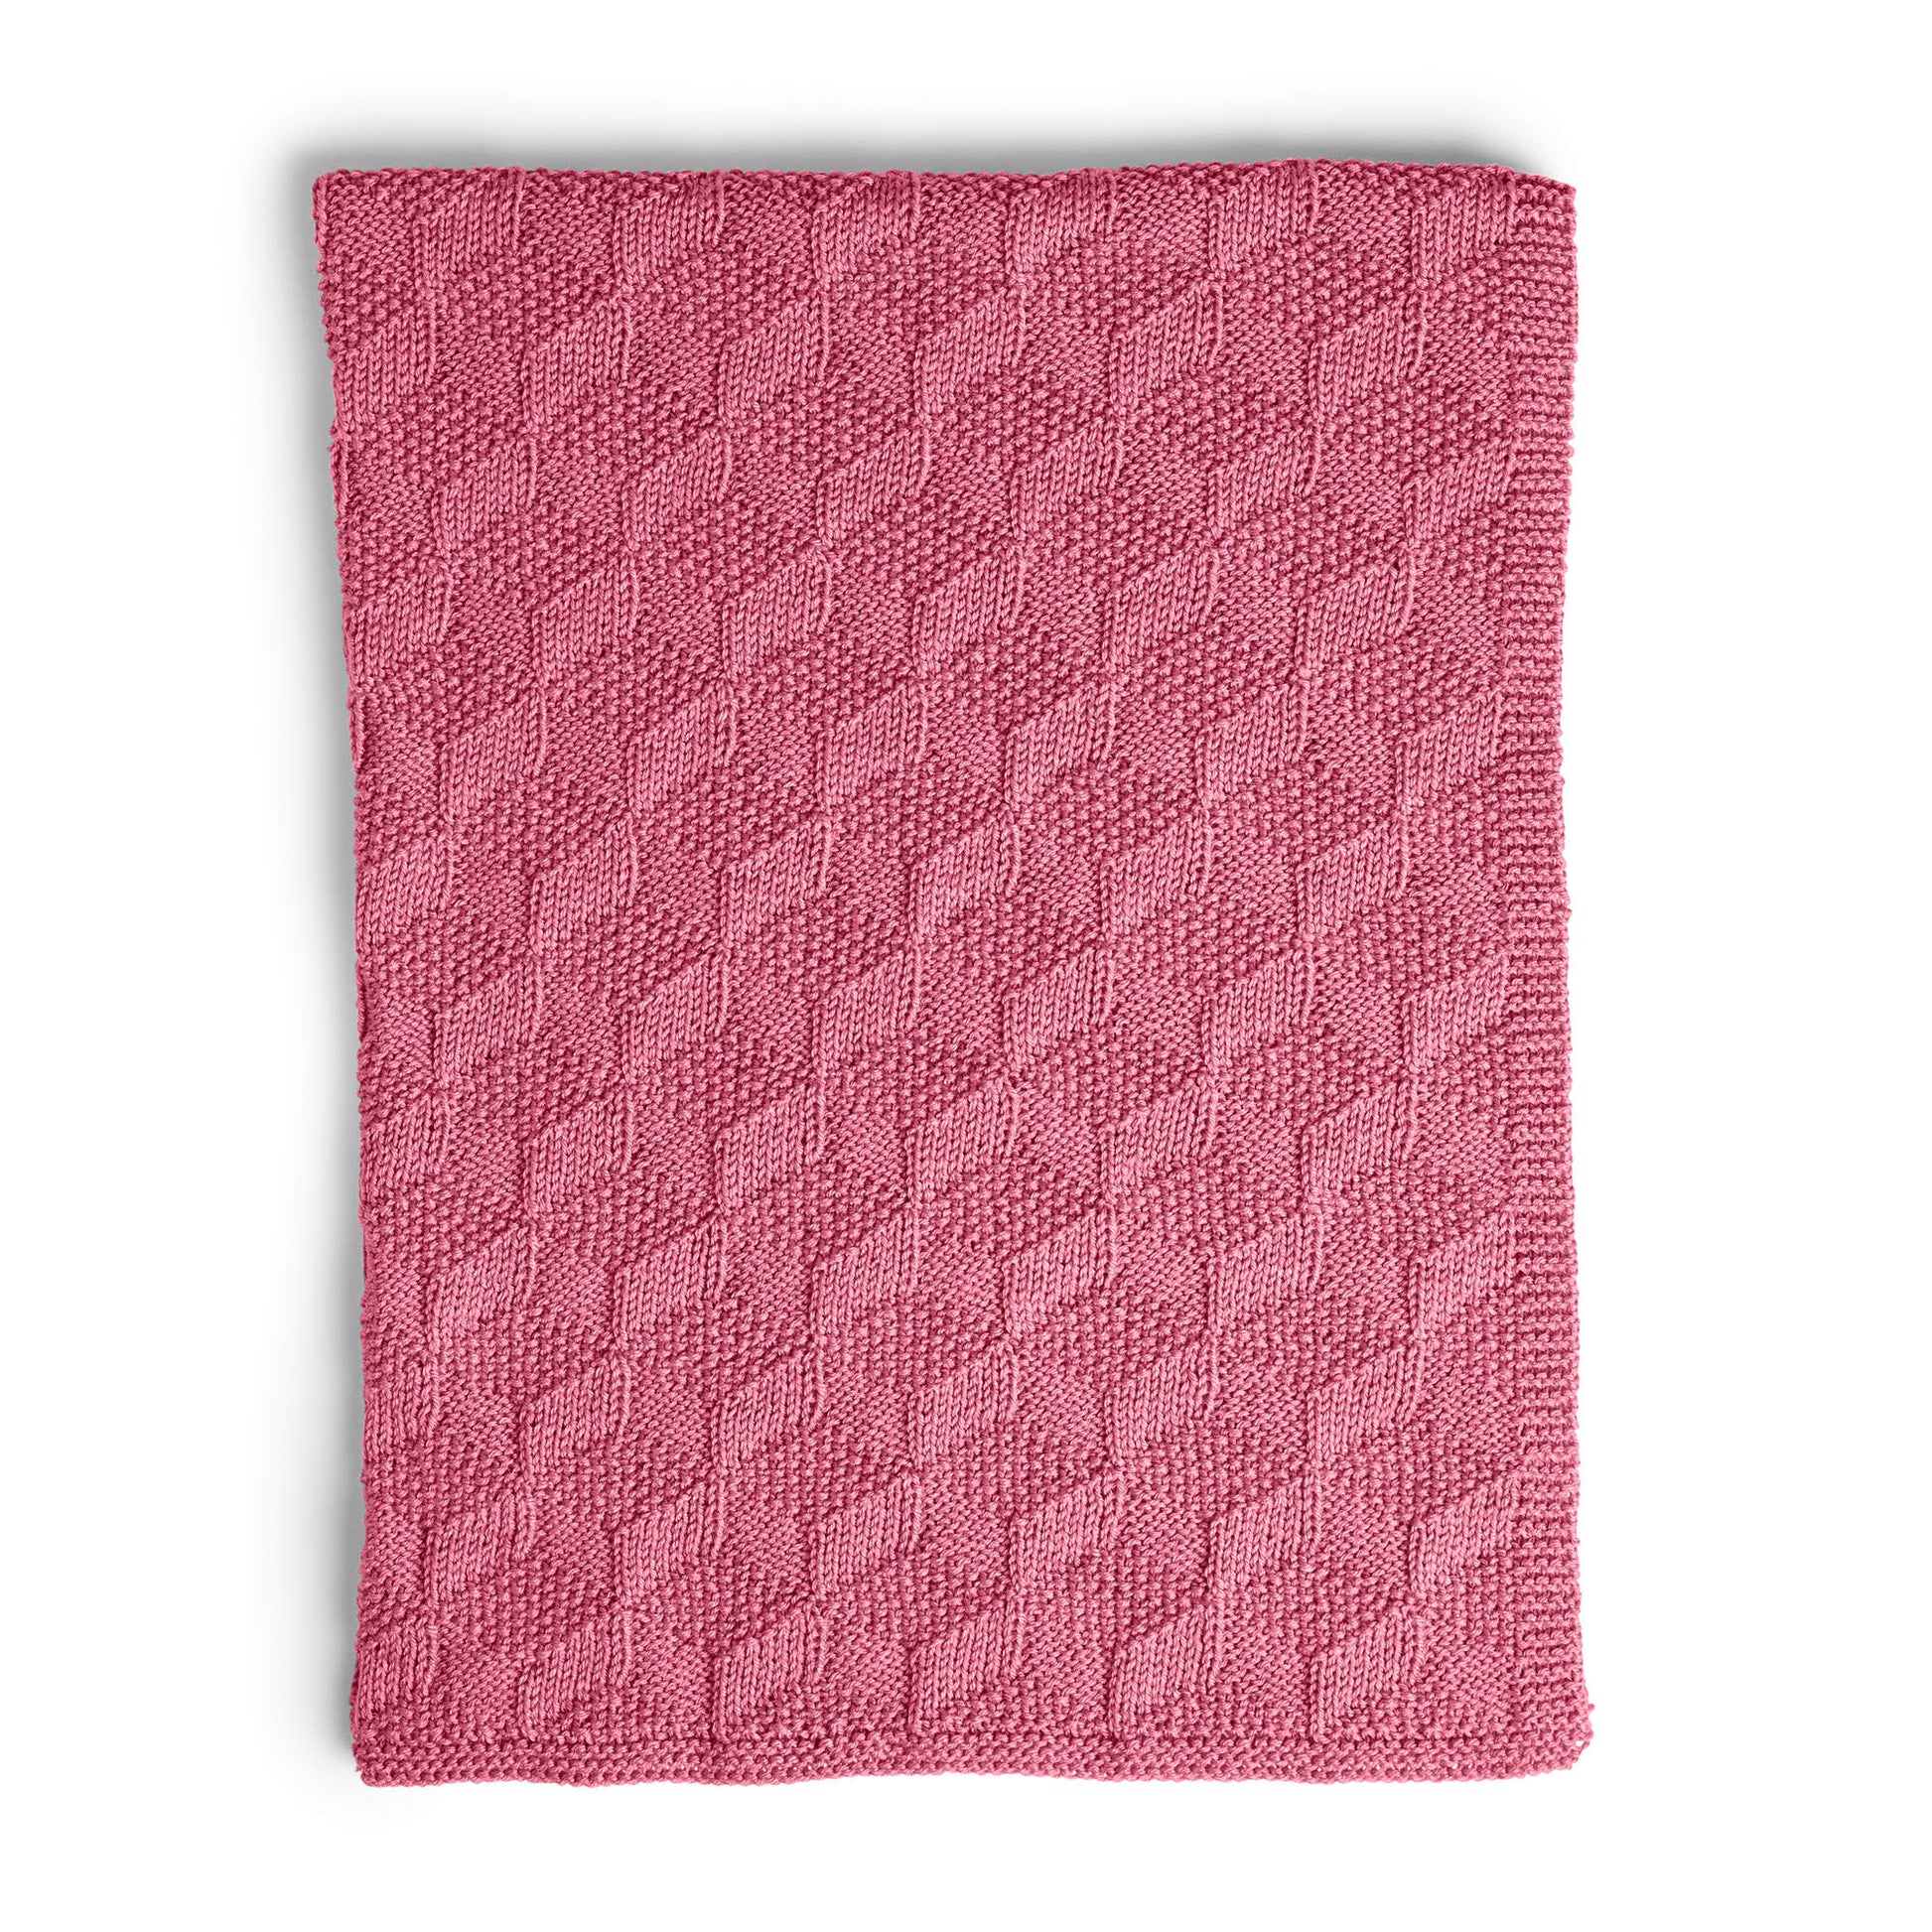 Caron Stack Up Blocks Knit Blanket Single Size